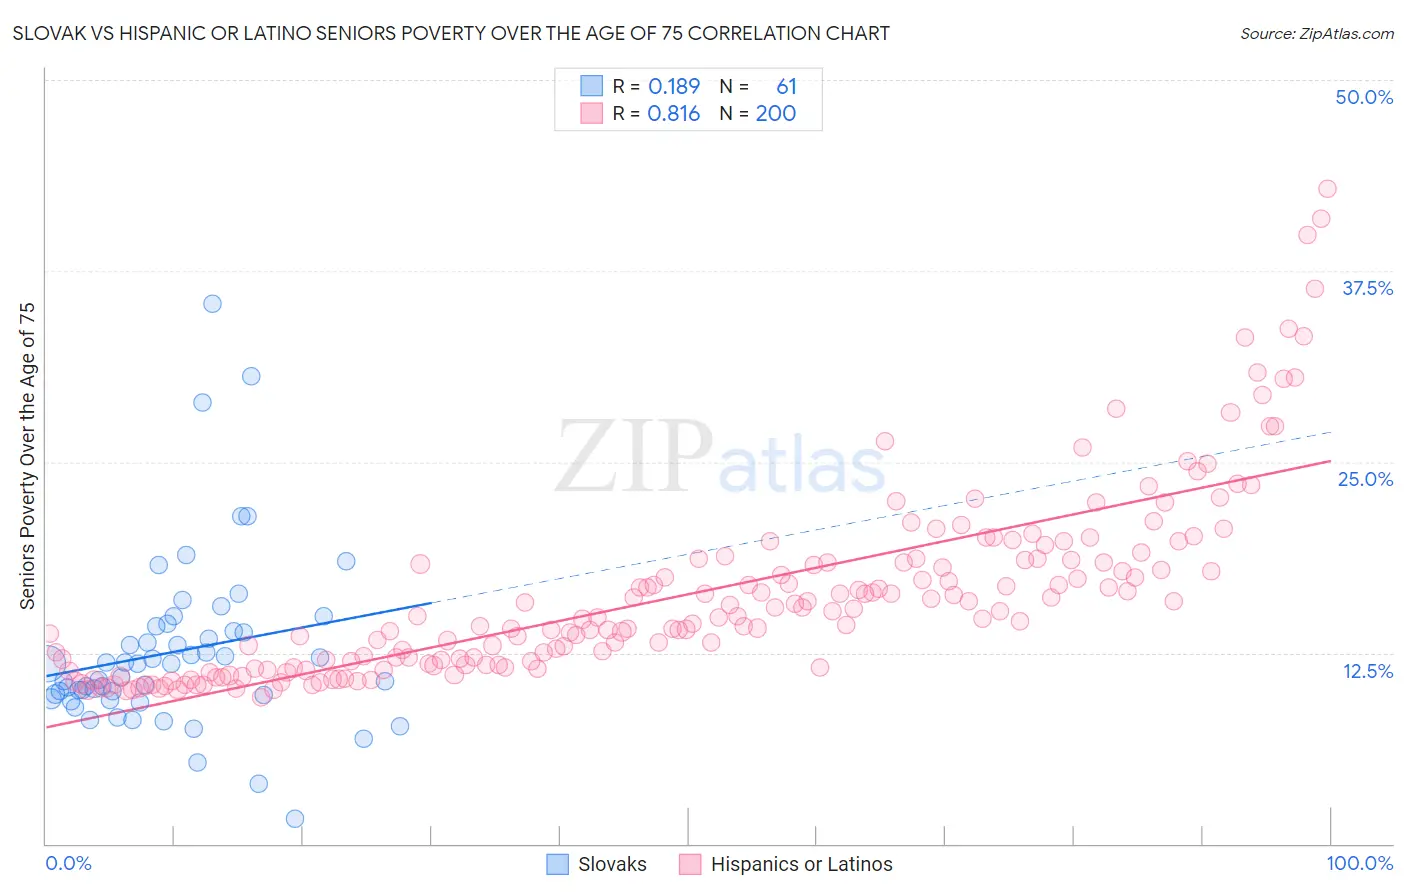 Slovak vs Hispanic or Latino Seniors Poverty Over the Age of 75